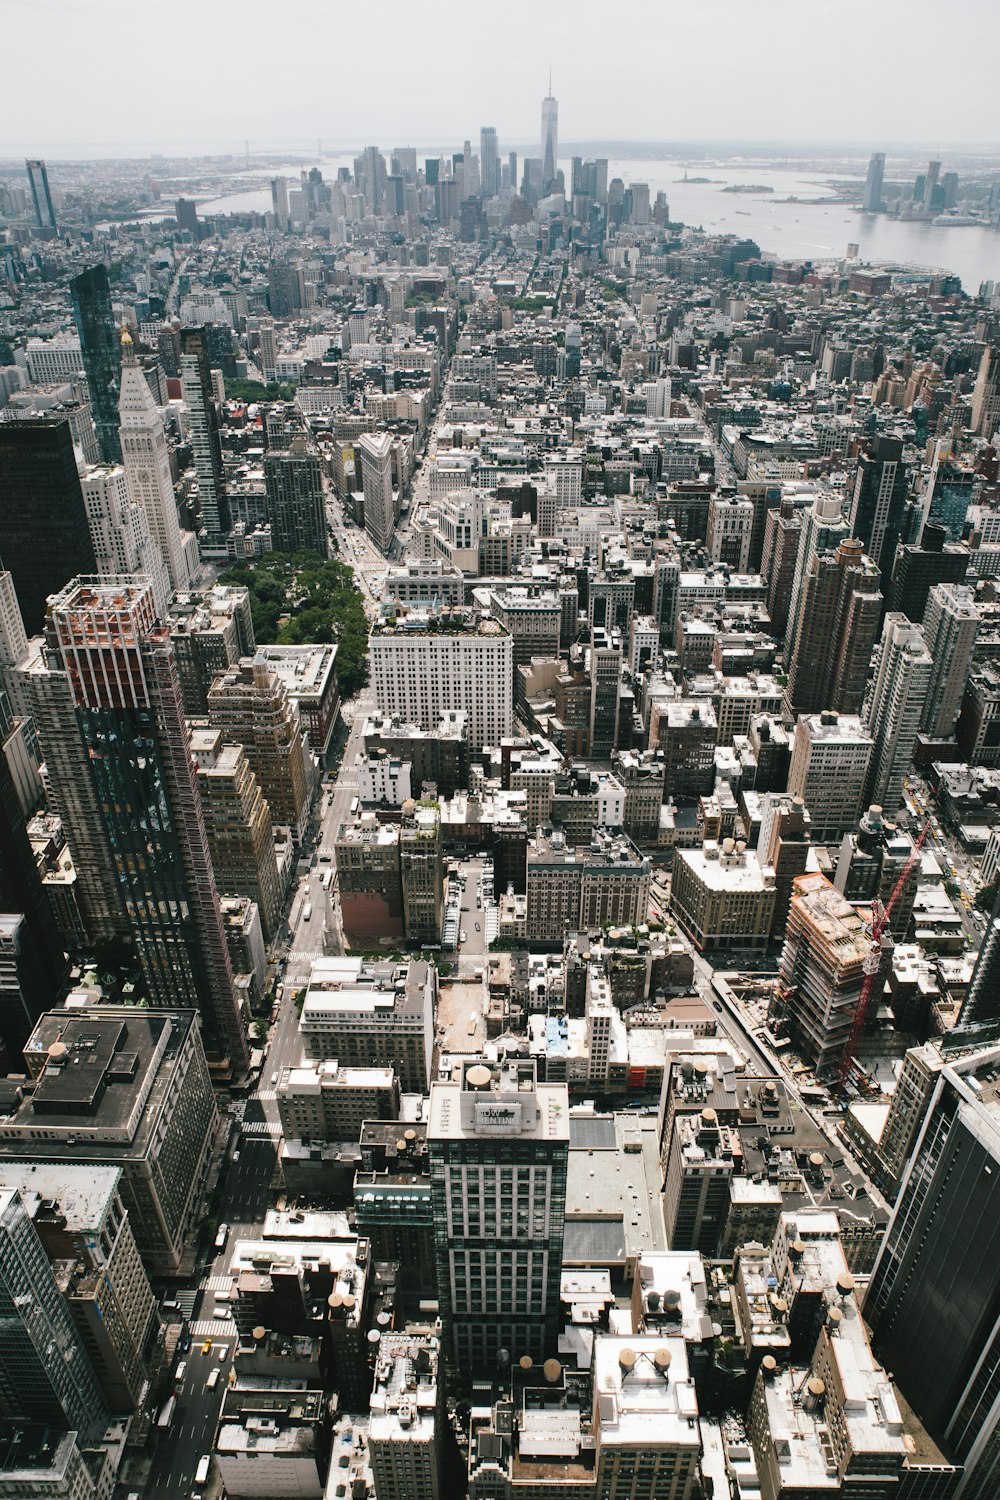 Vista aérea de edificios de gran altura